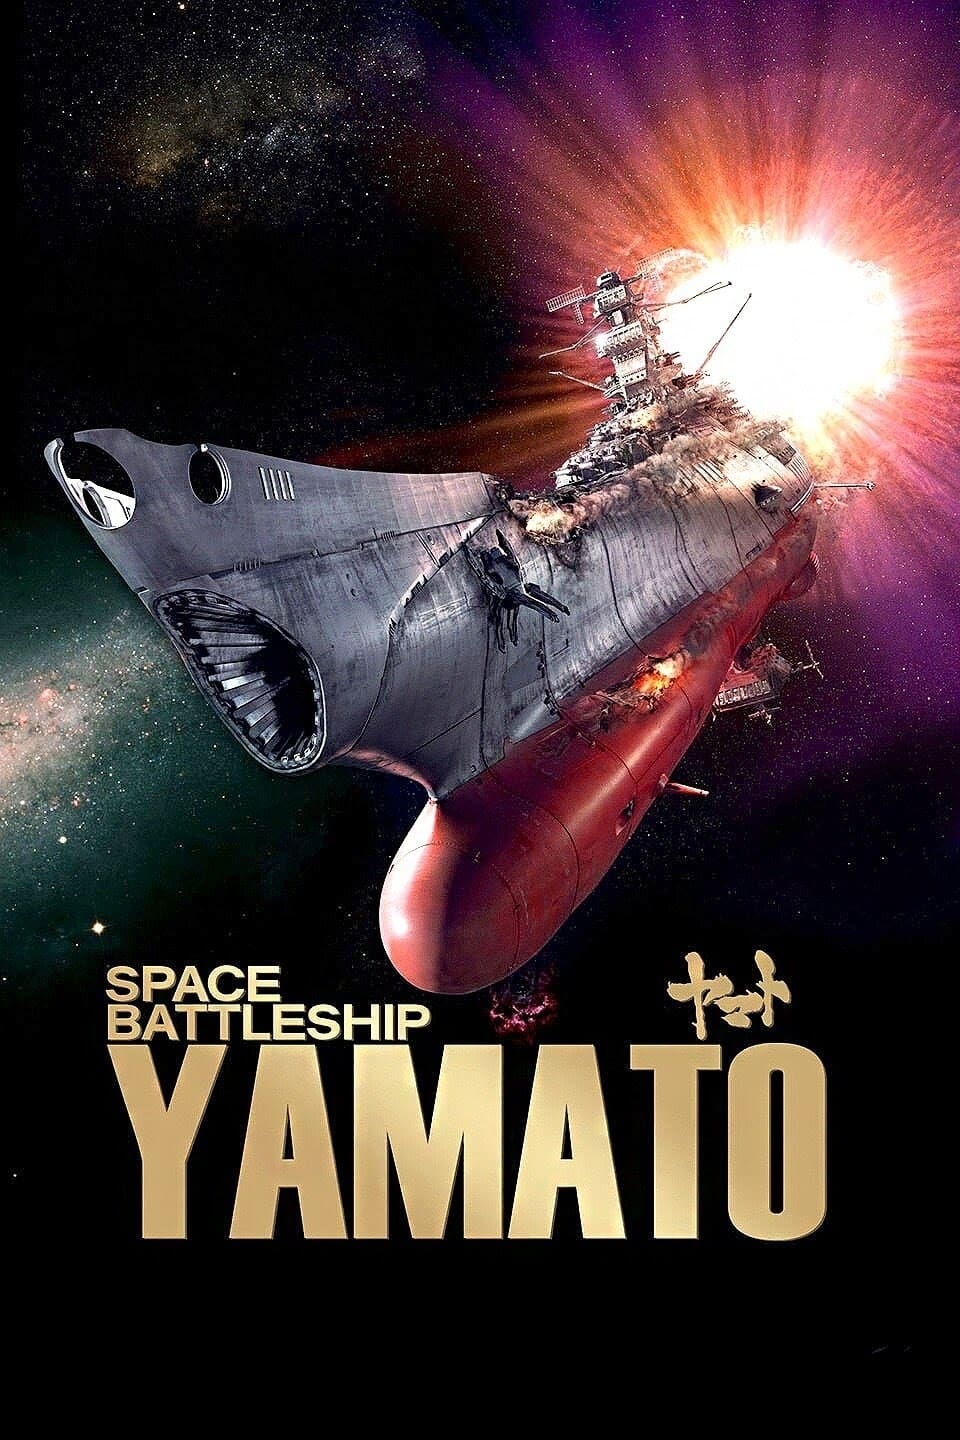 Patrulha Estelar Yamato (2010)